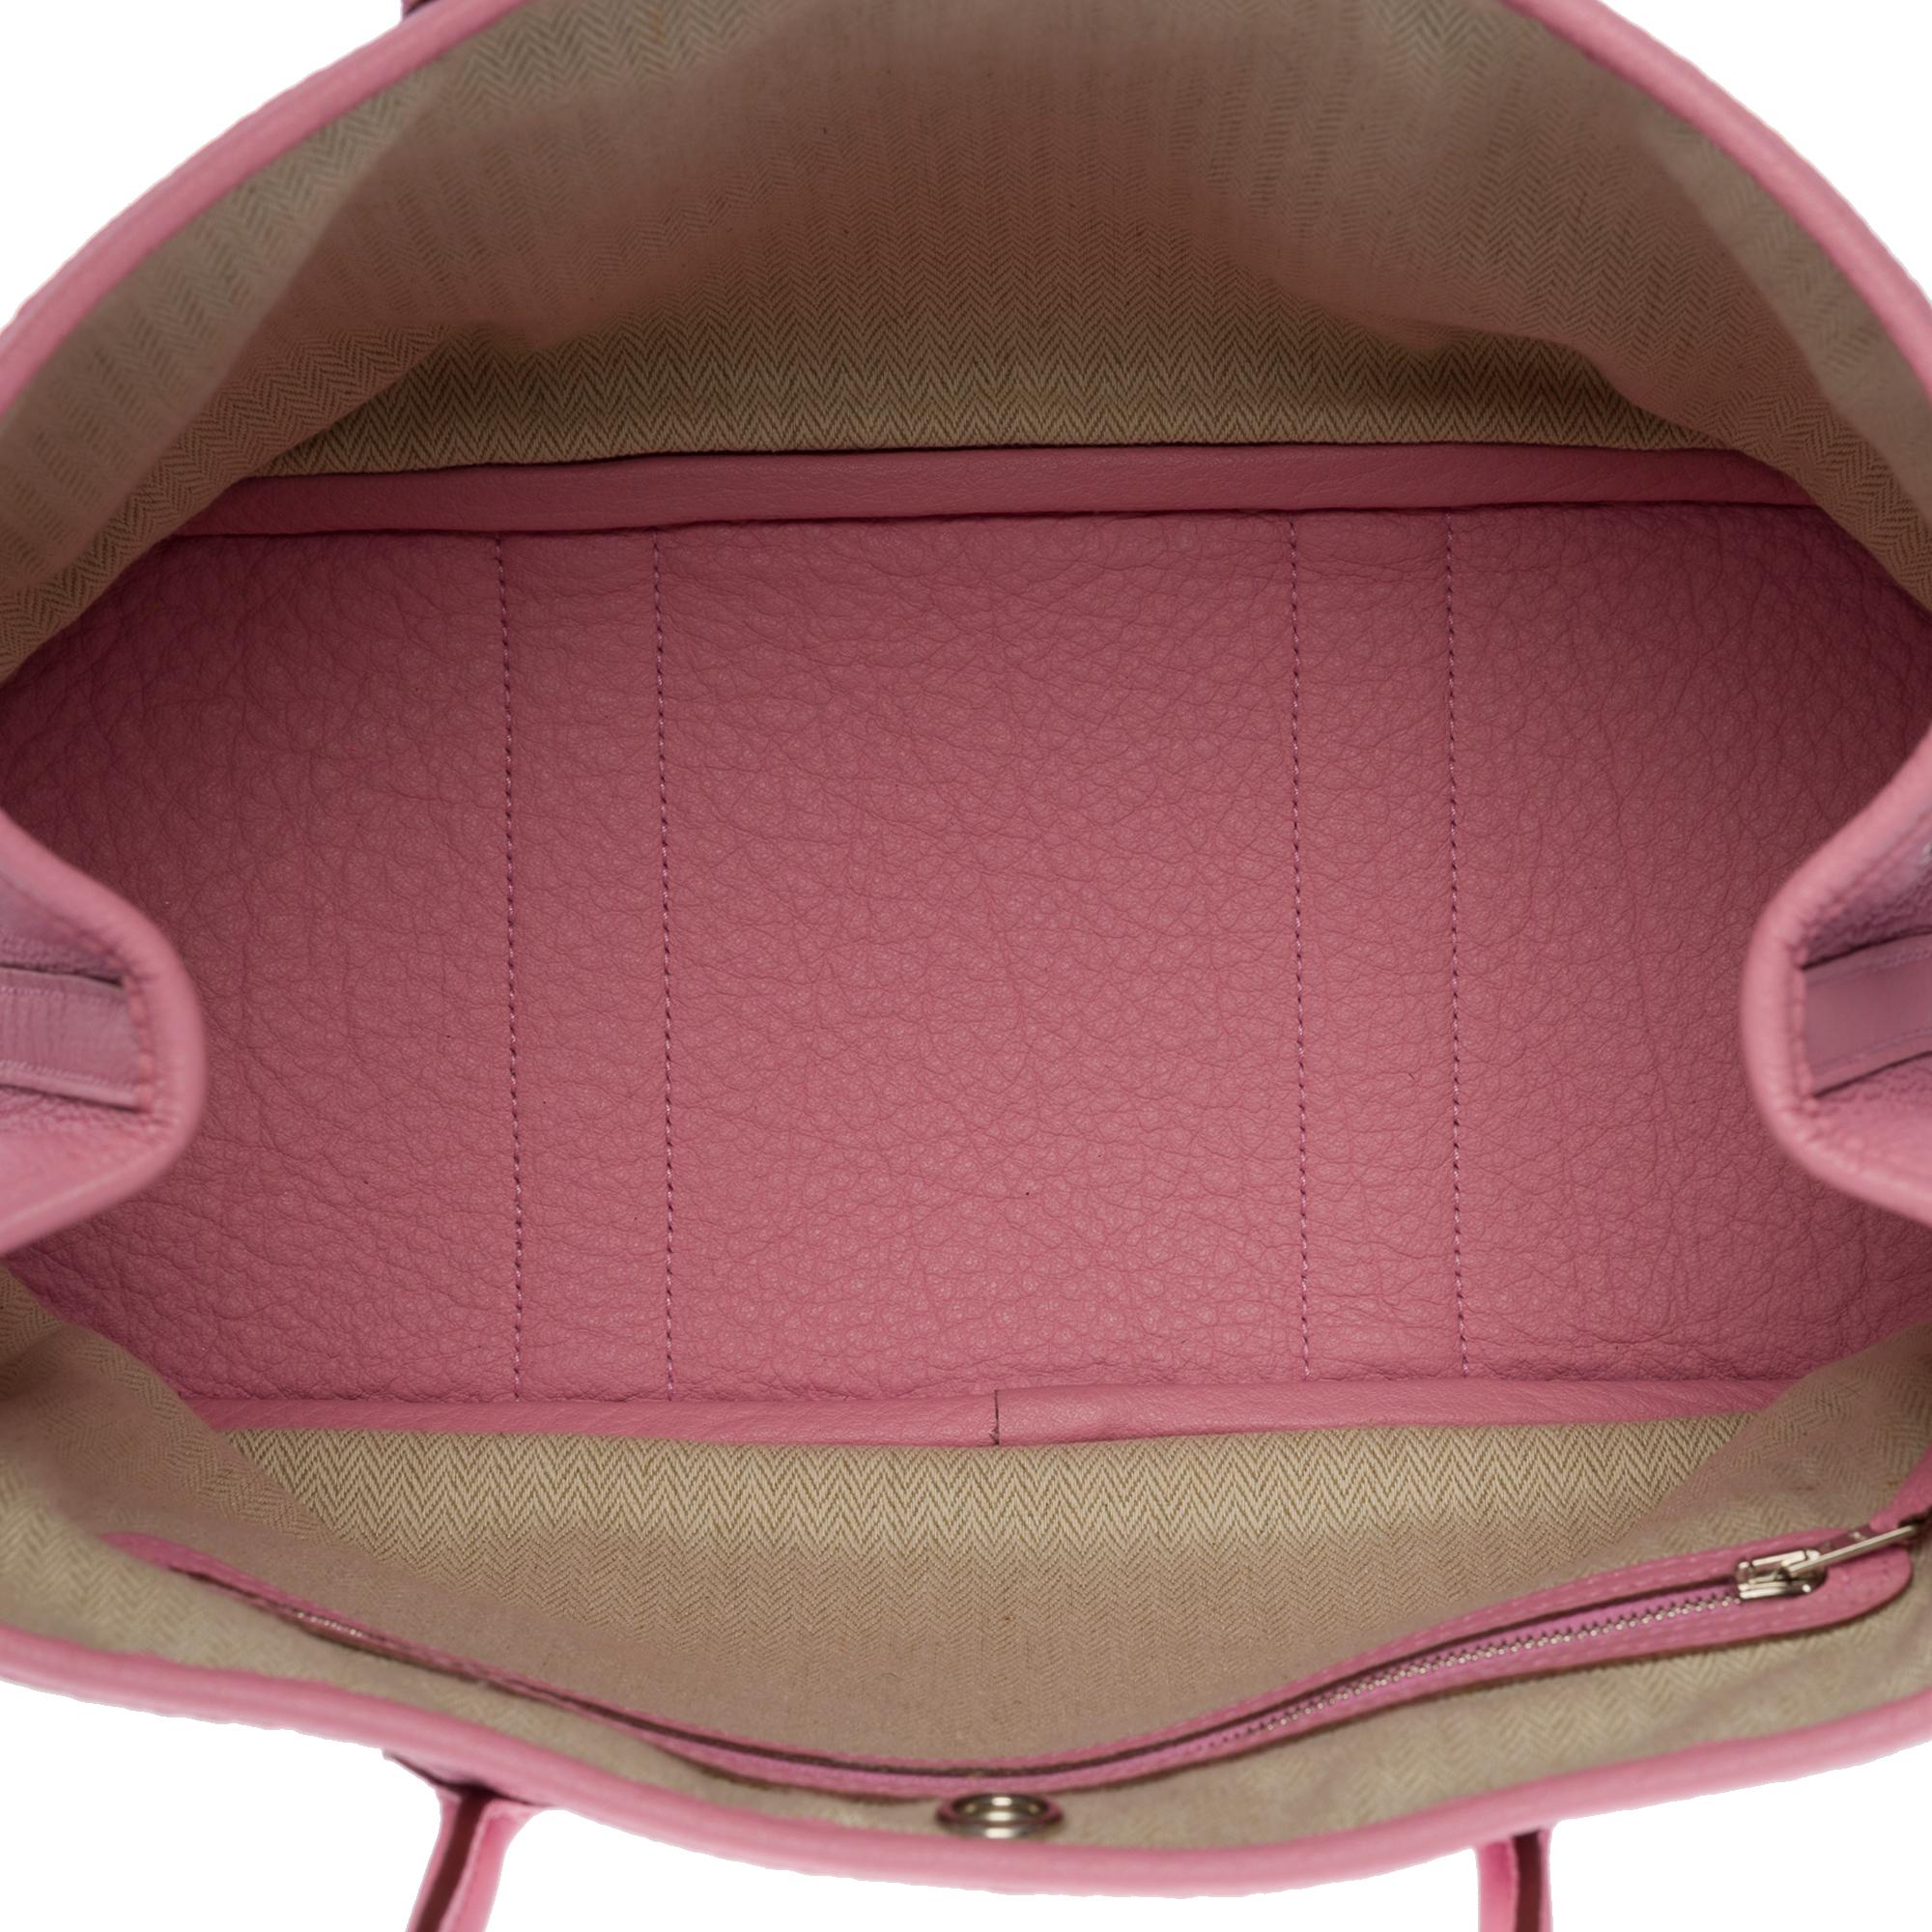 Gorgeous Hermès Garden Party TPM Tote bag in Sakura Pink Negonda leather, SHW For Sale 1